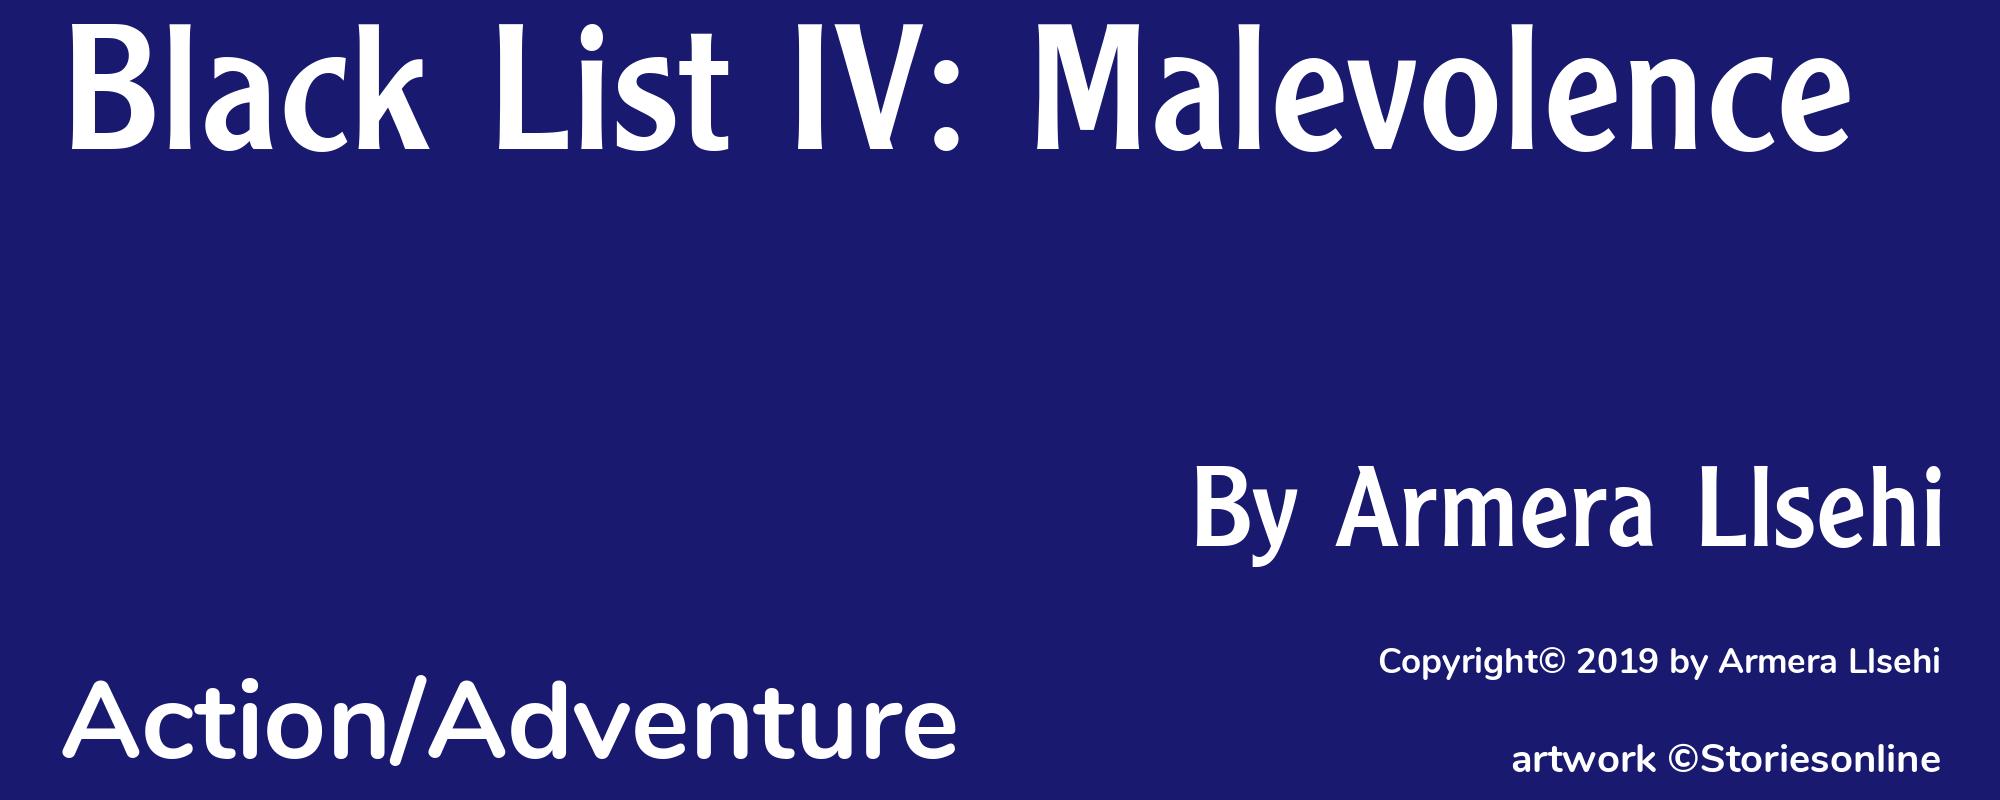 Black List IV: Malevolence - Cover